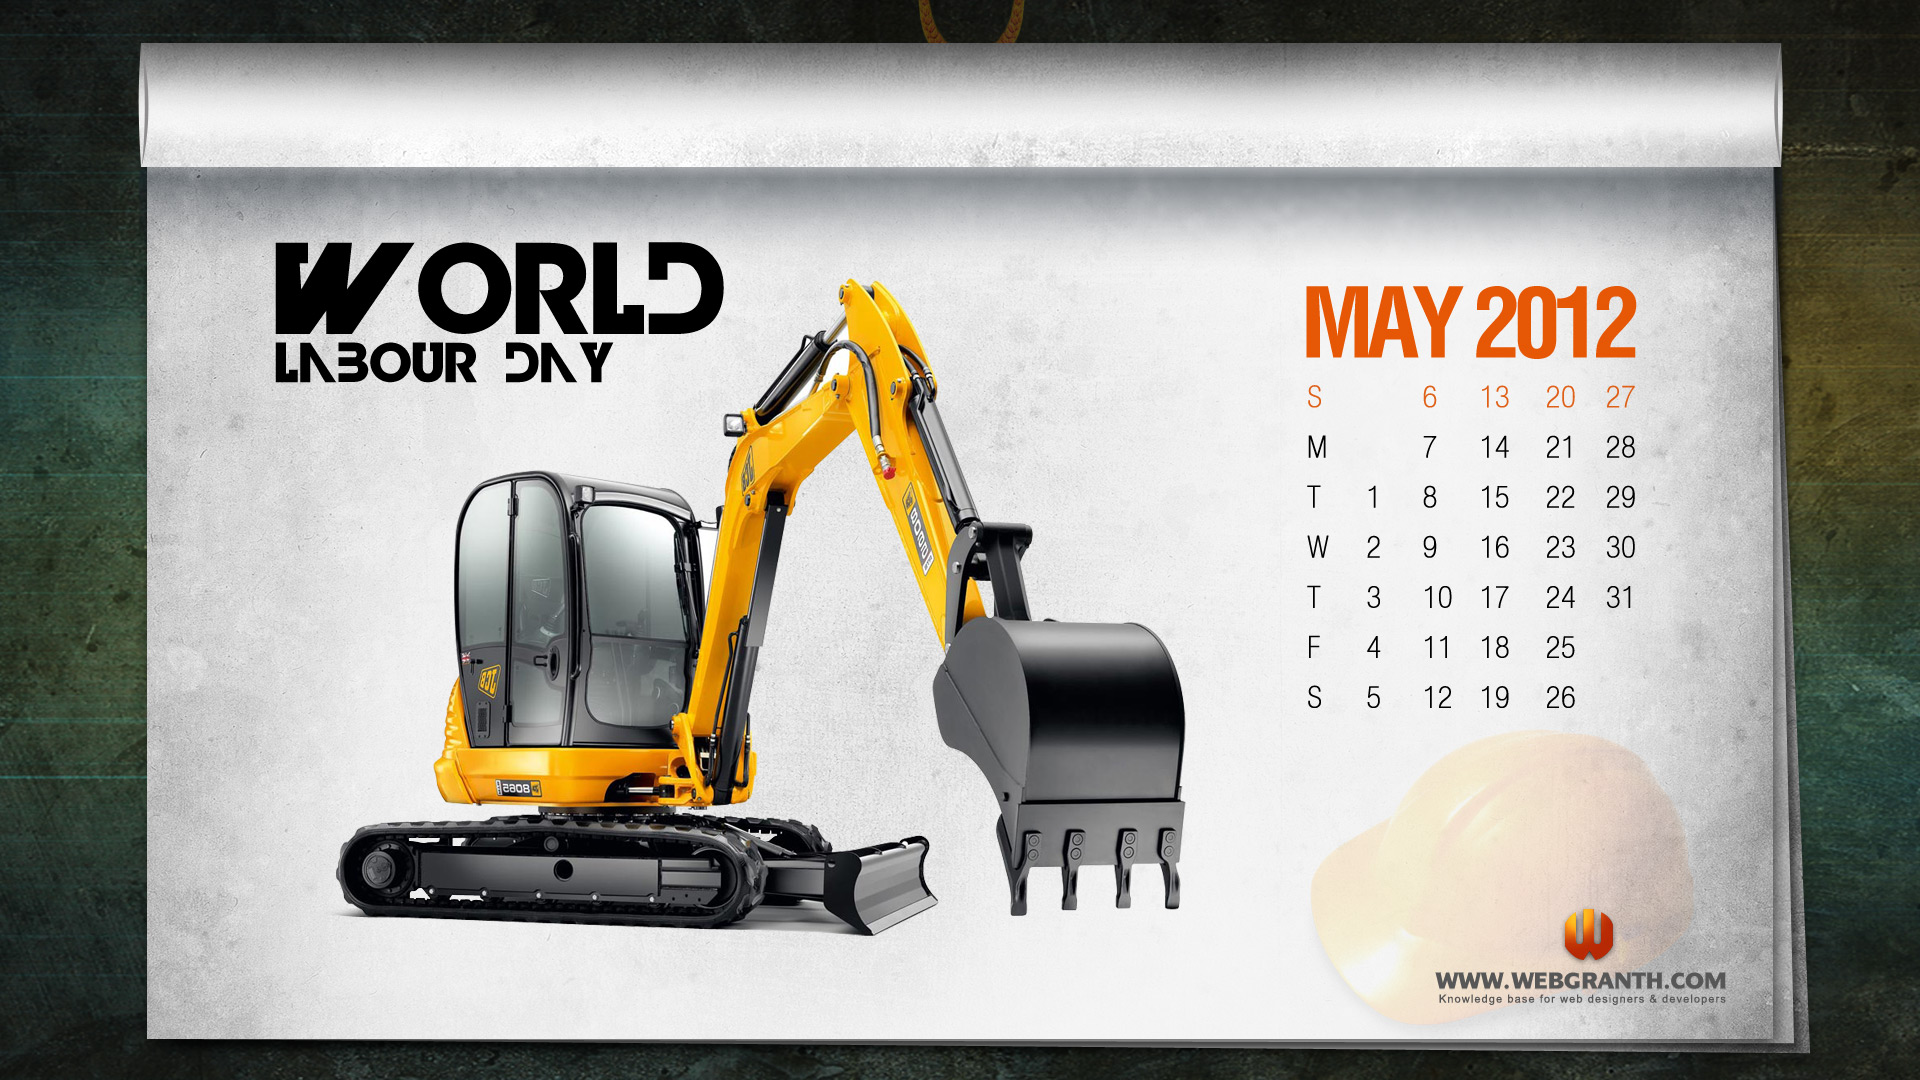 World Labor Day Calendar Wallpaper Webgranth